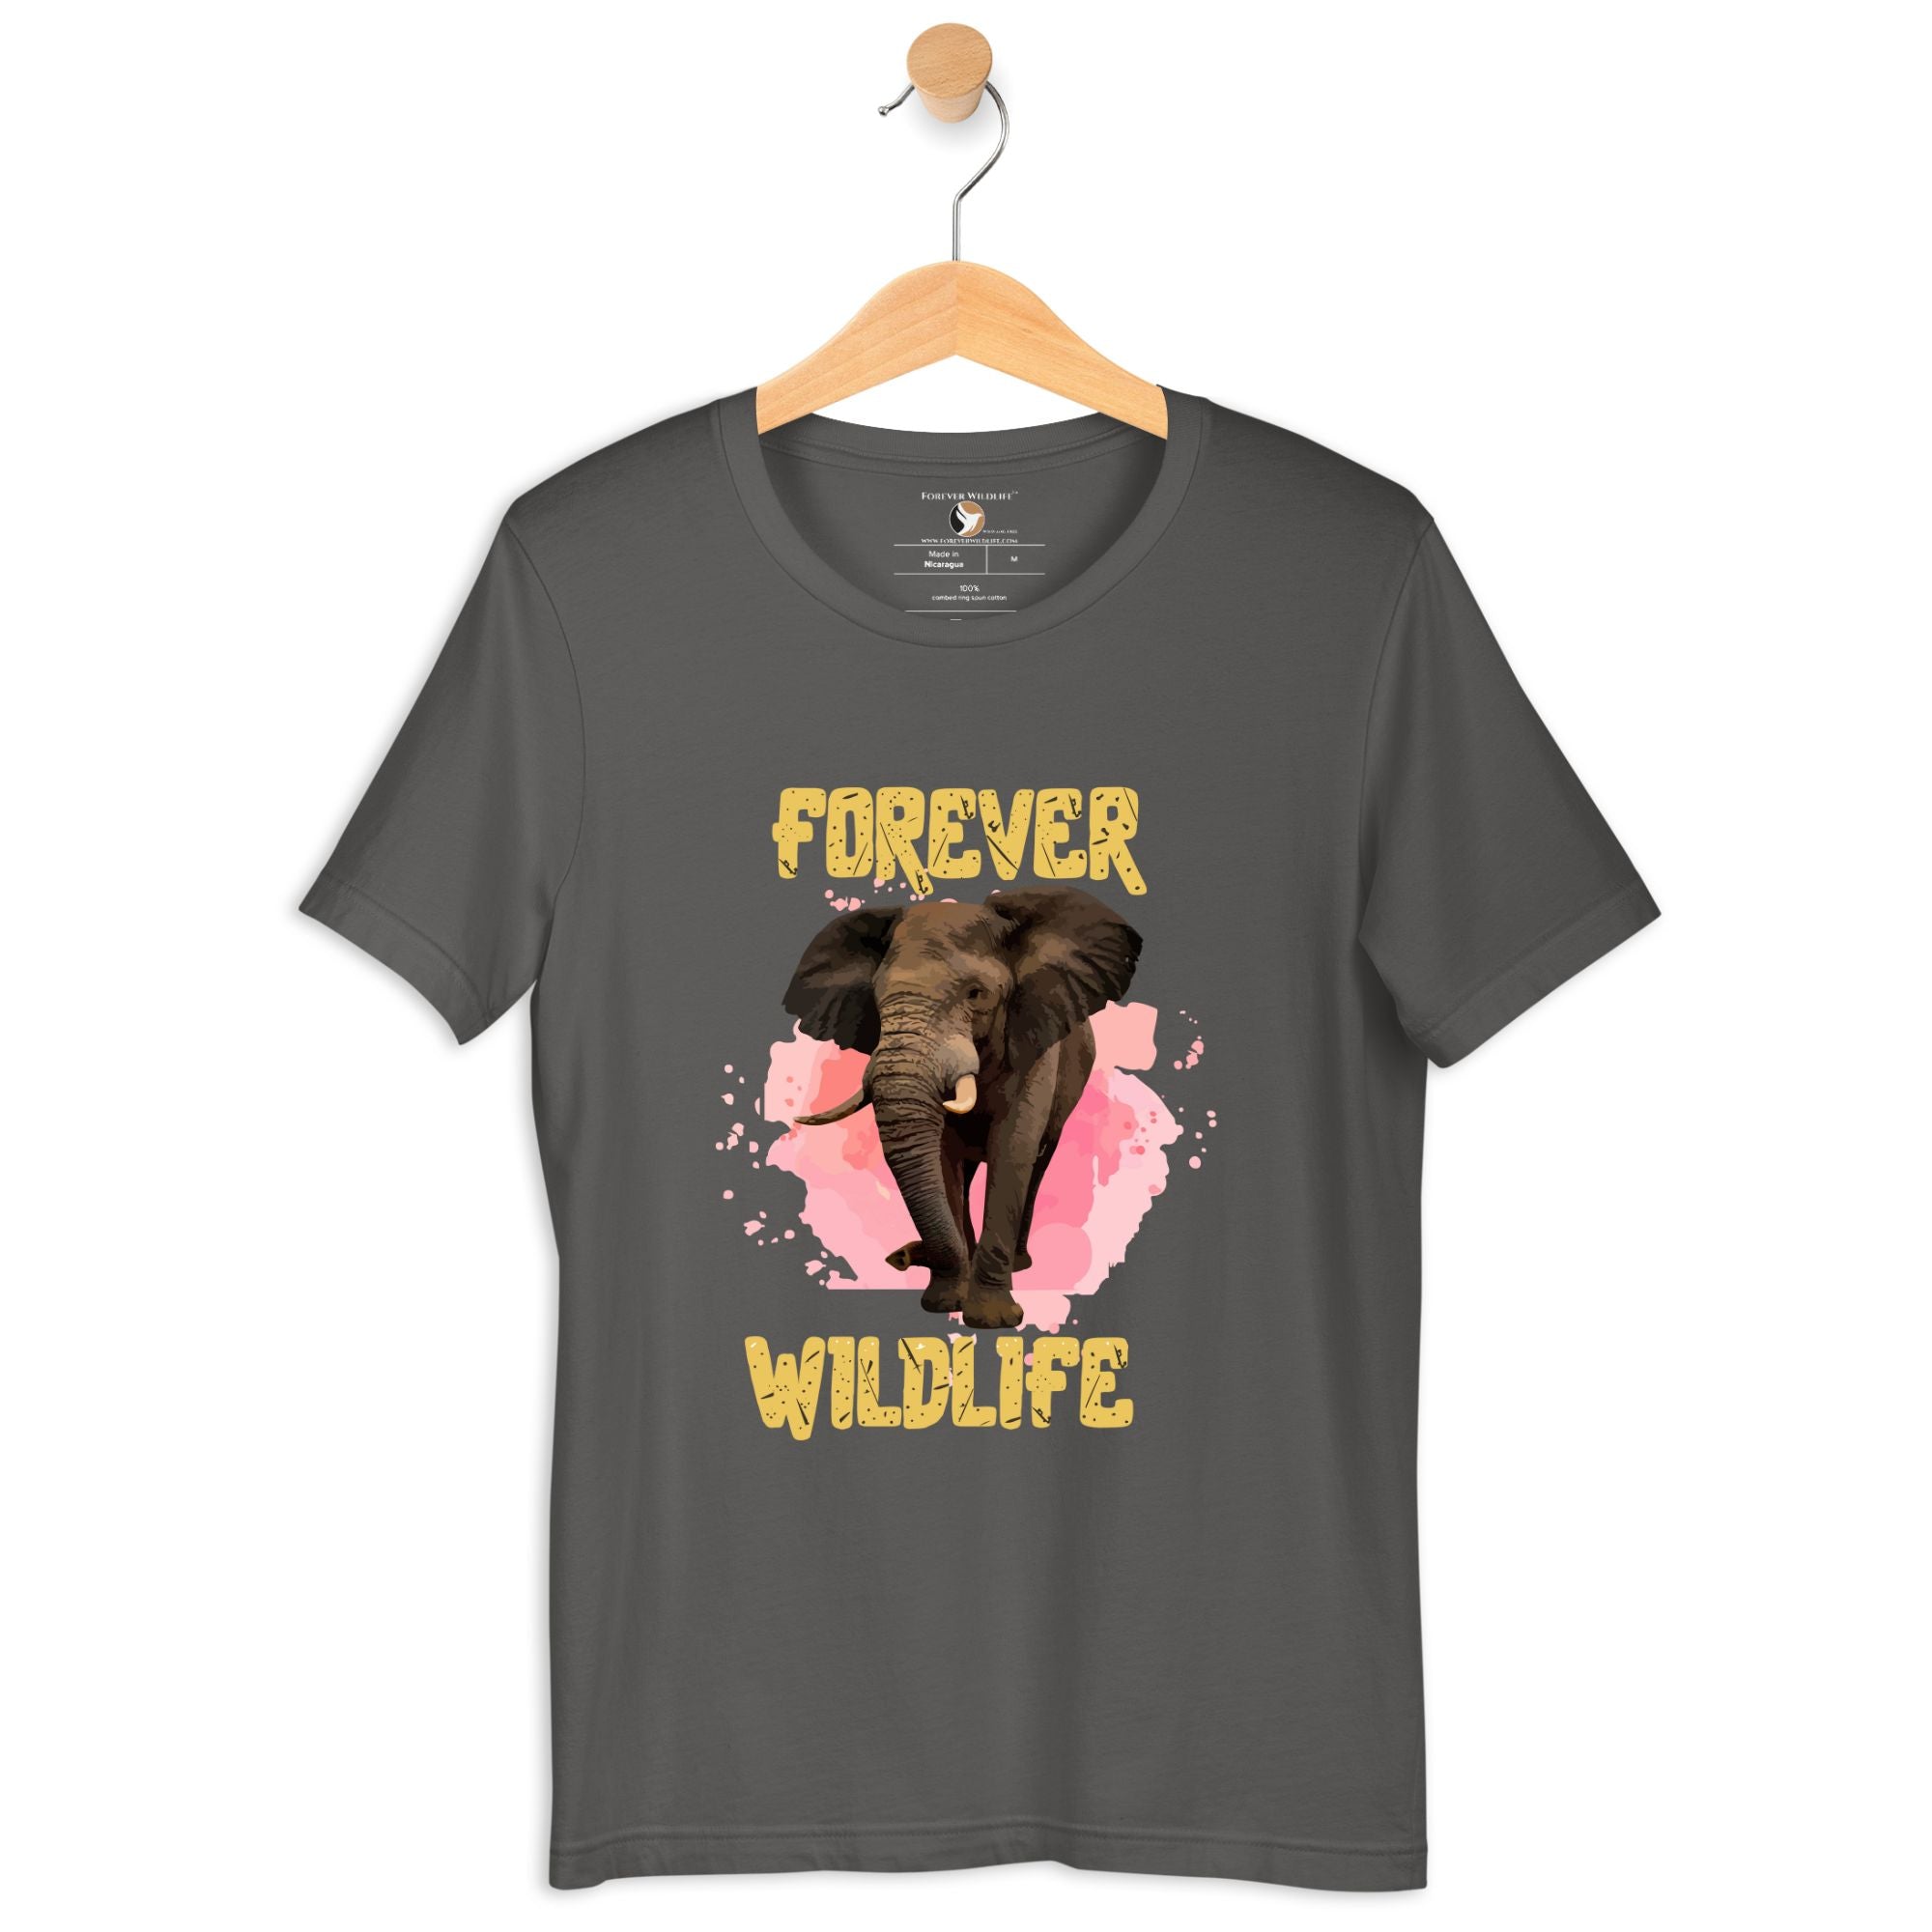 Elephant T-Shirt in Asphalt – Premium Wildlife T-Shirt Design, Wildlife Clothing & Apparel from Forever Wildlife